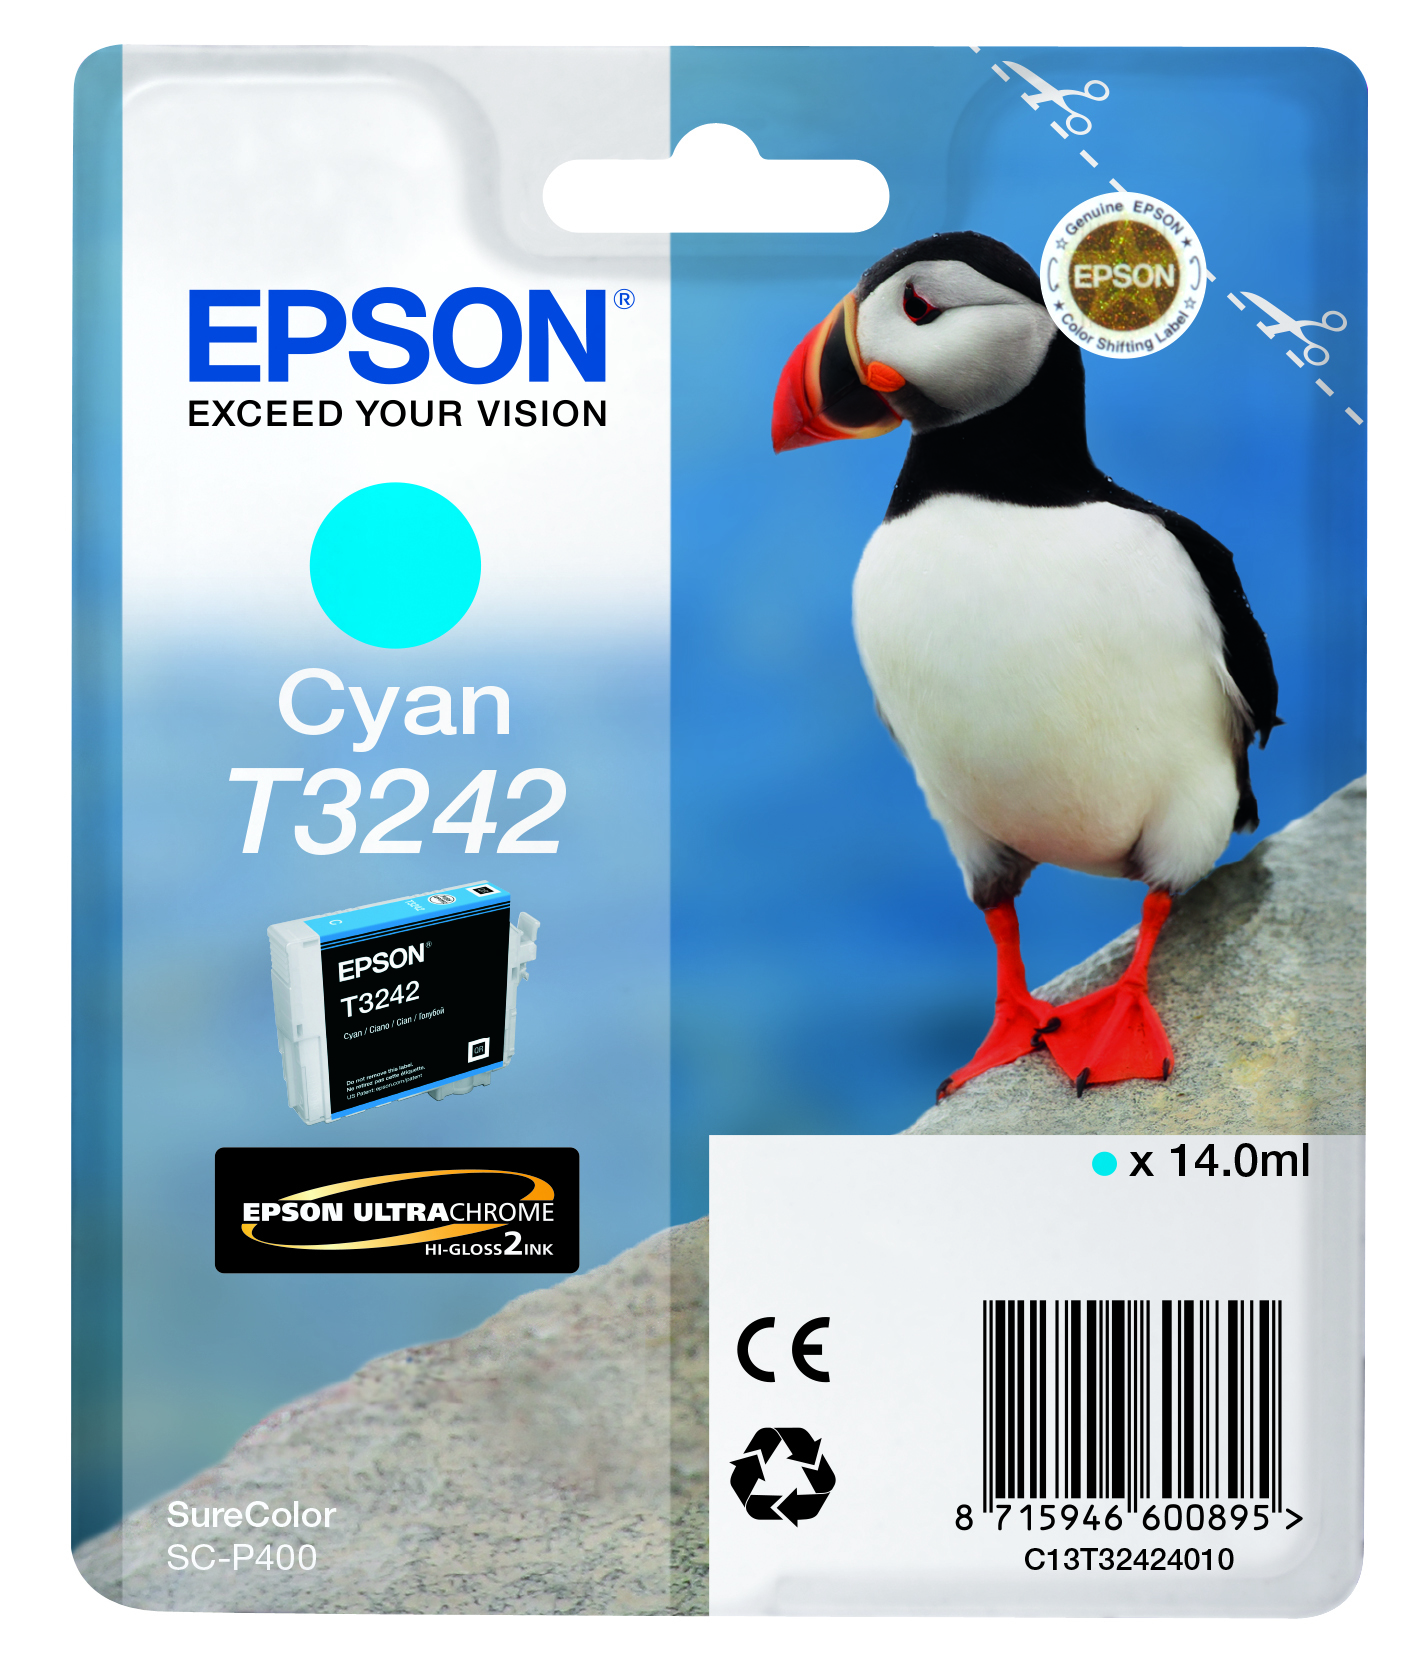 Epson SureColor T3242 Cyan single pack / cyaan